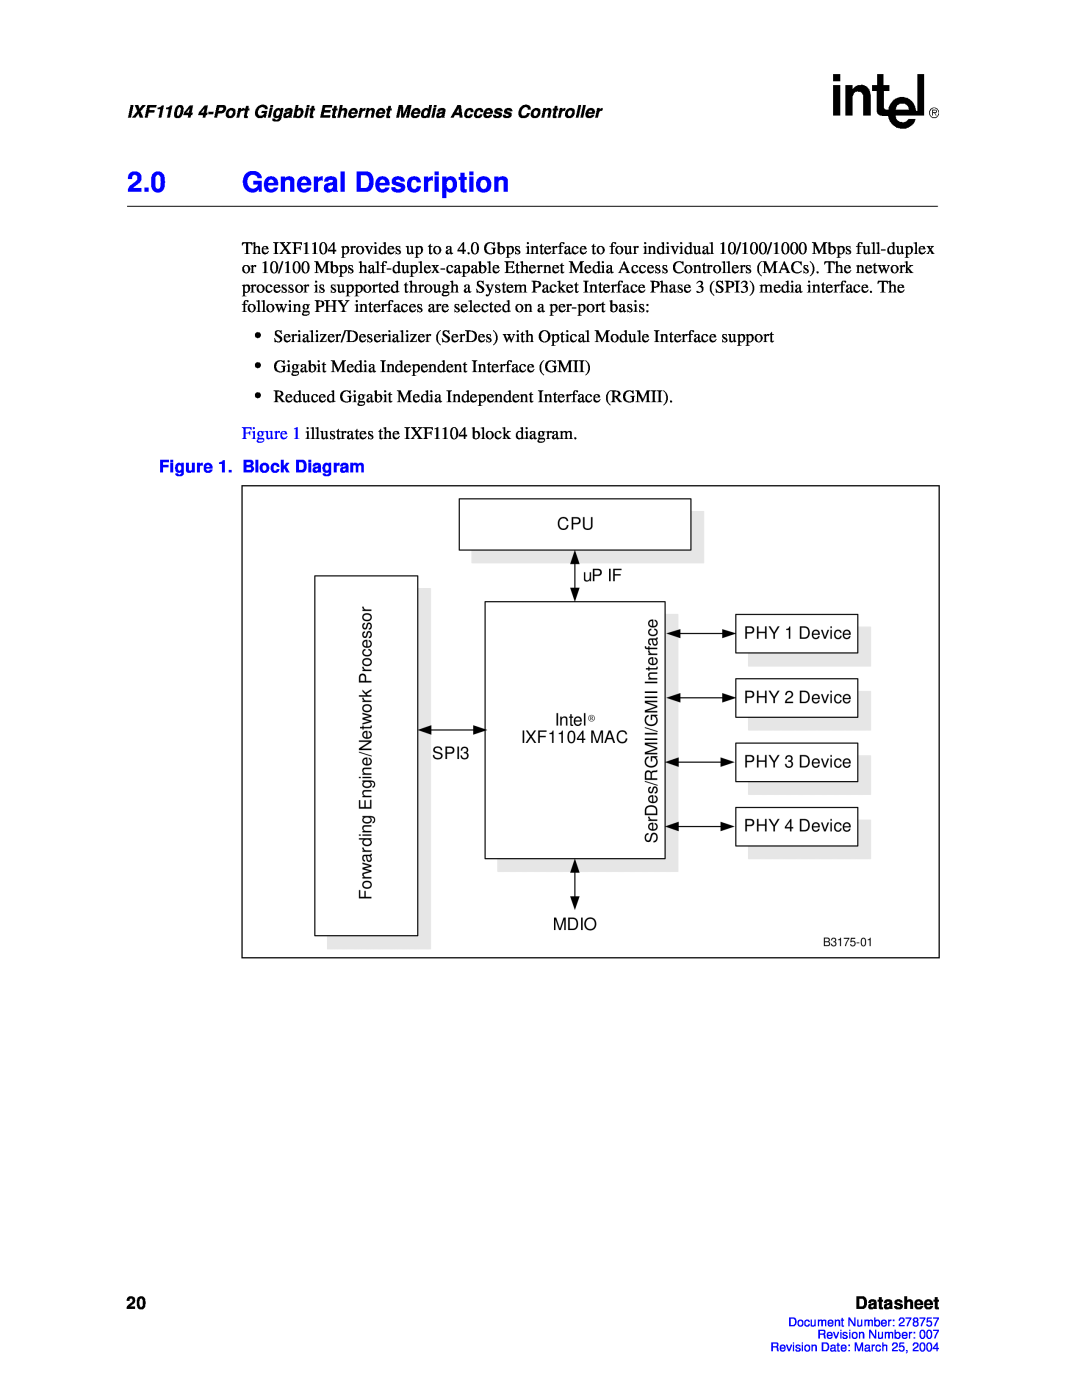 Intel IXF1104 manual 2.0General Description, Datasheet 